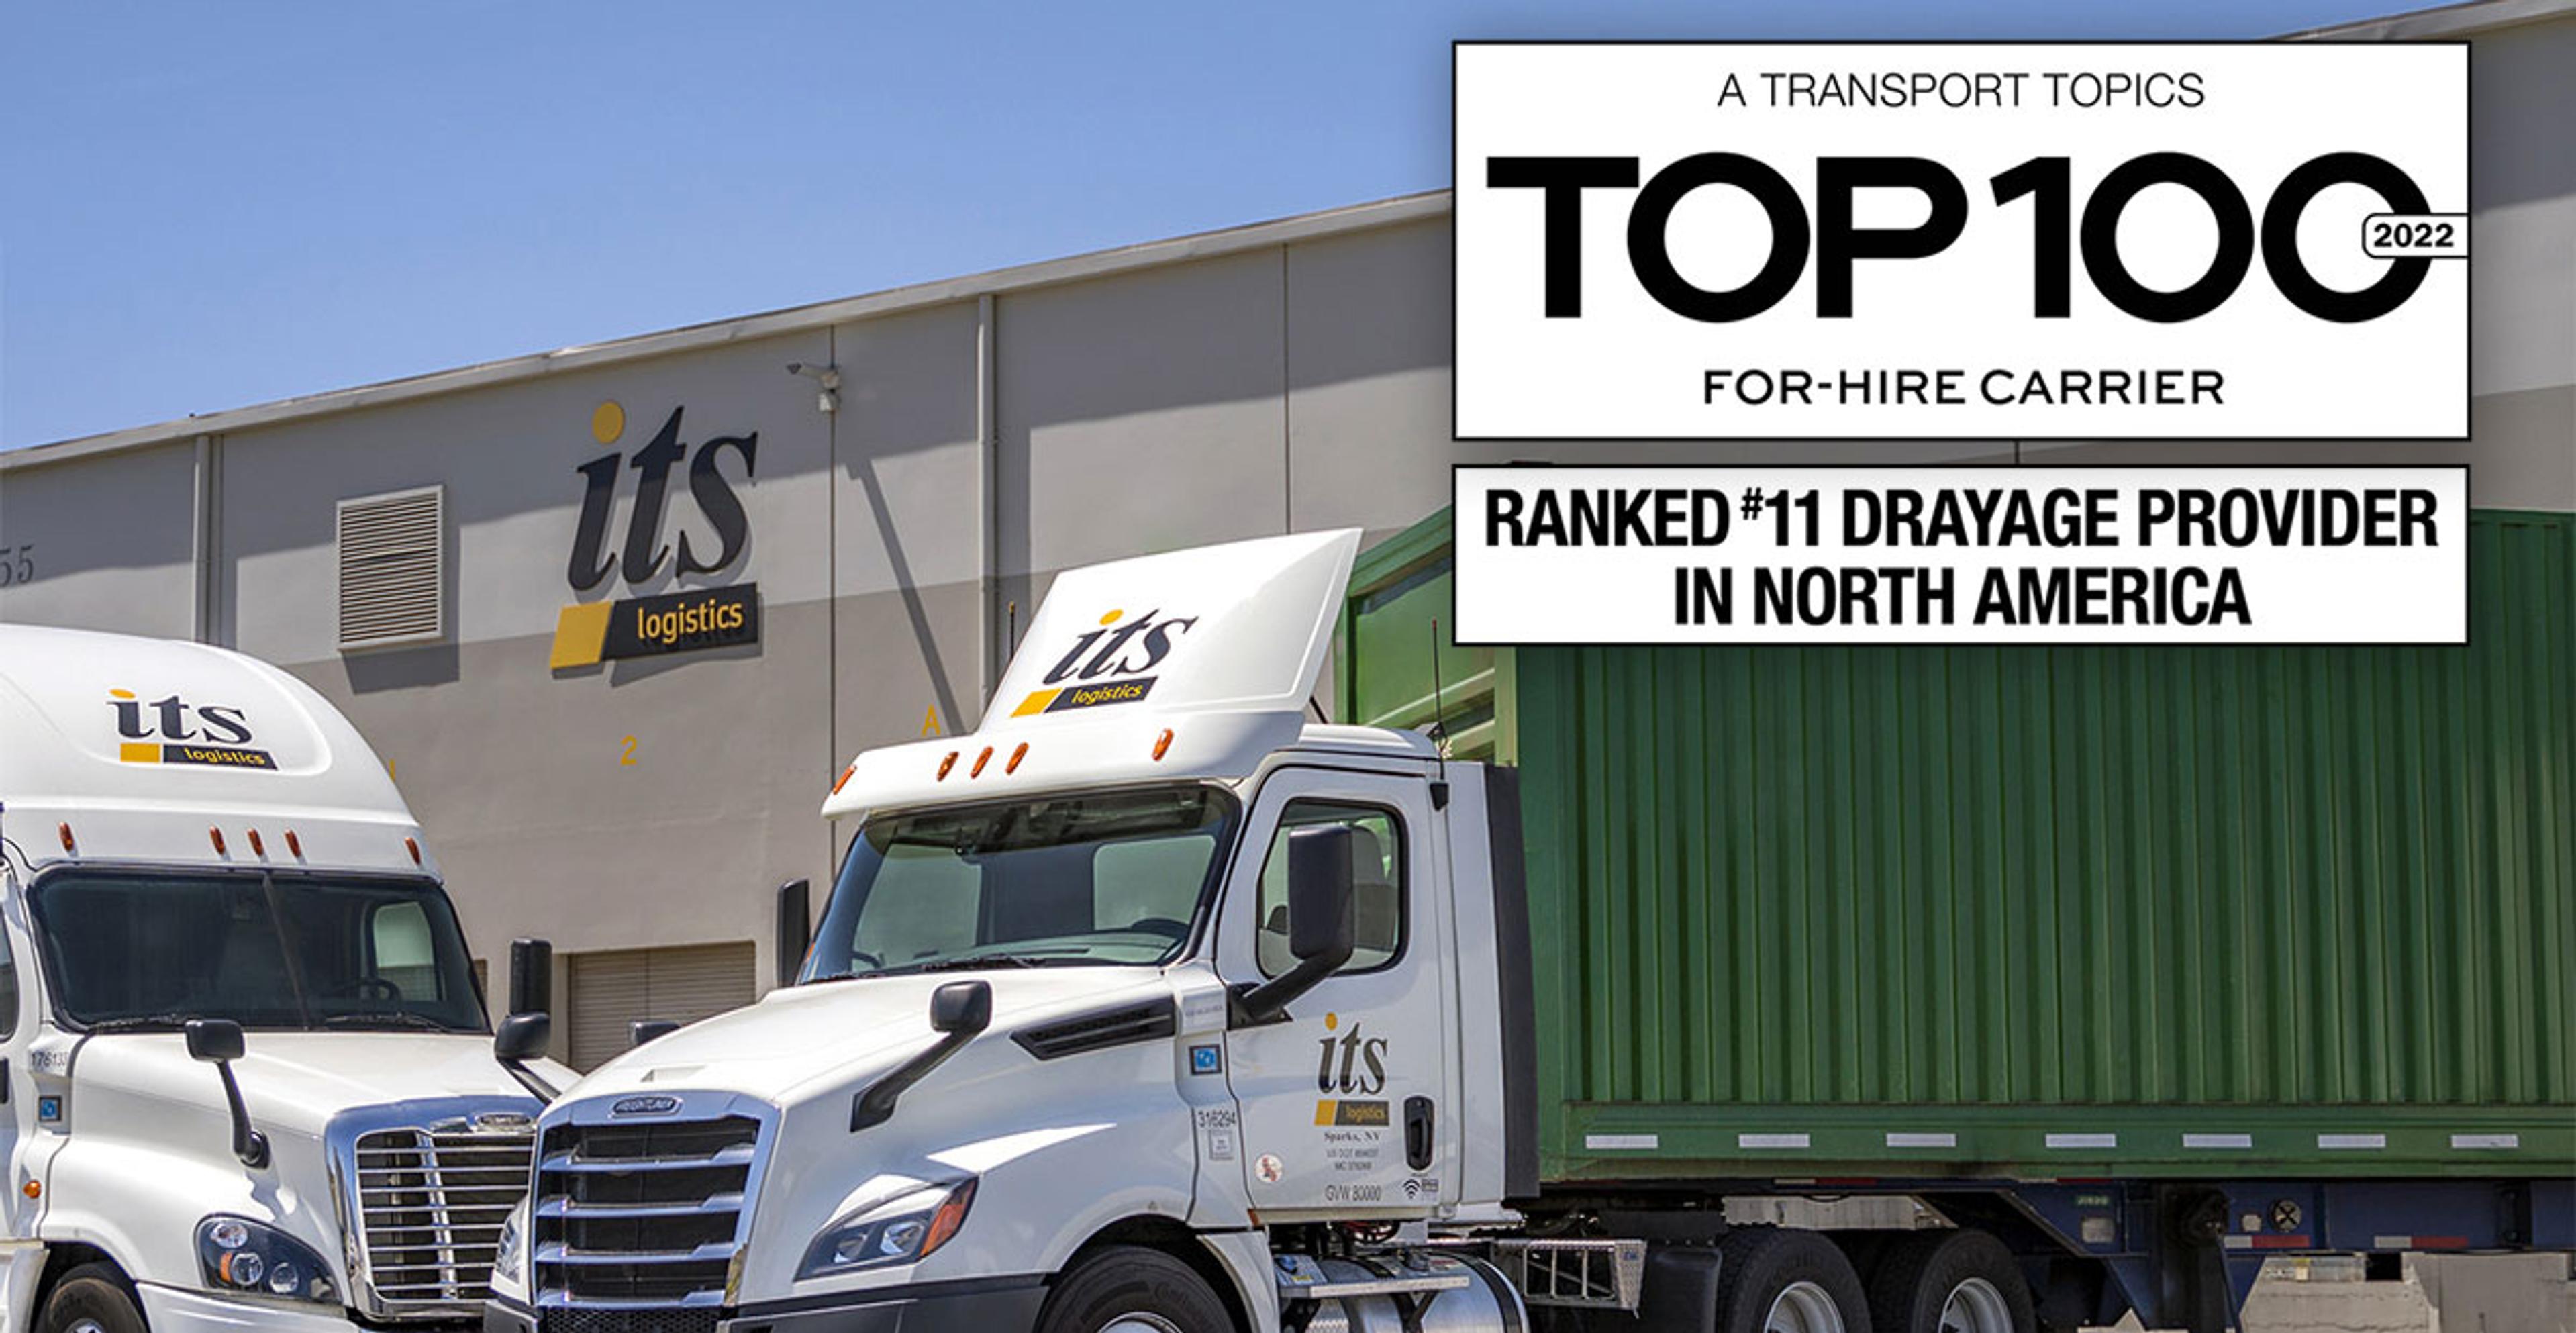 ITS Logistics ranked #11 drayage provider in North America